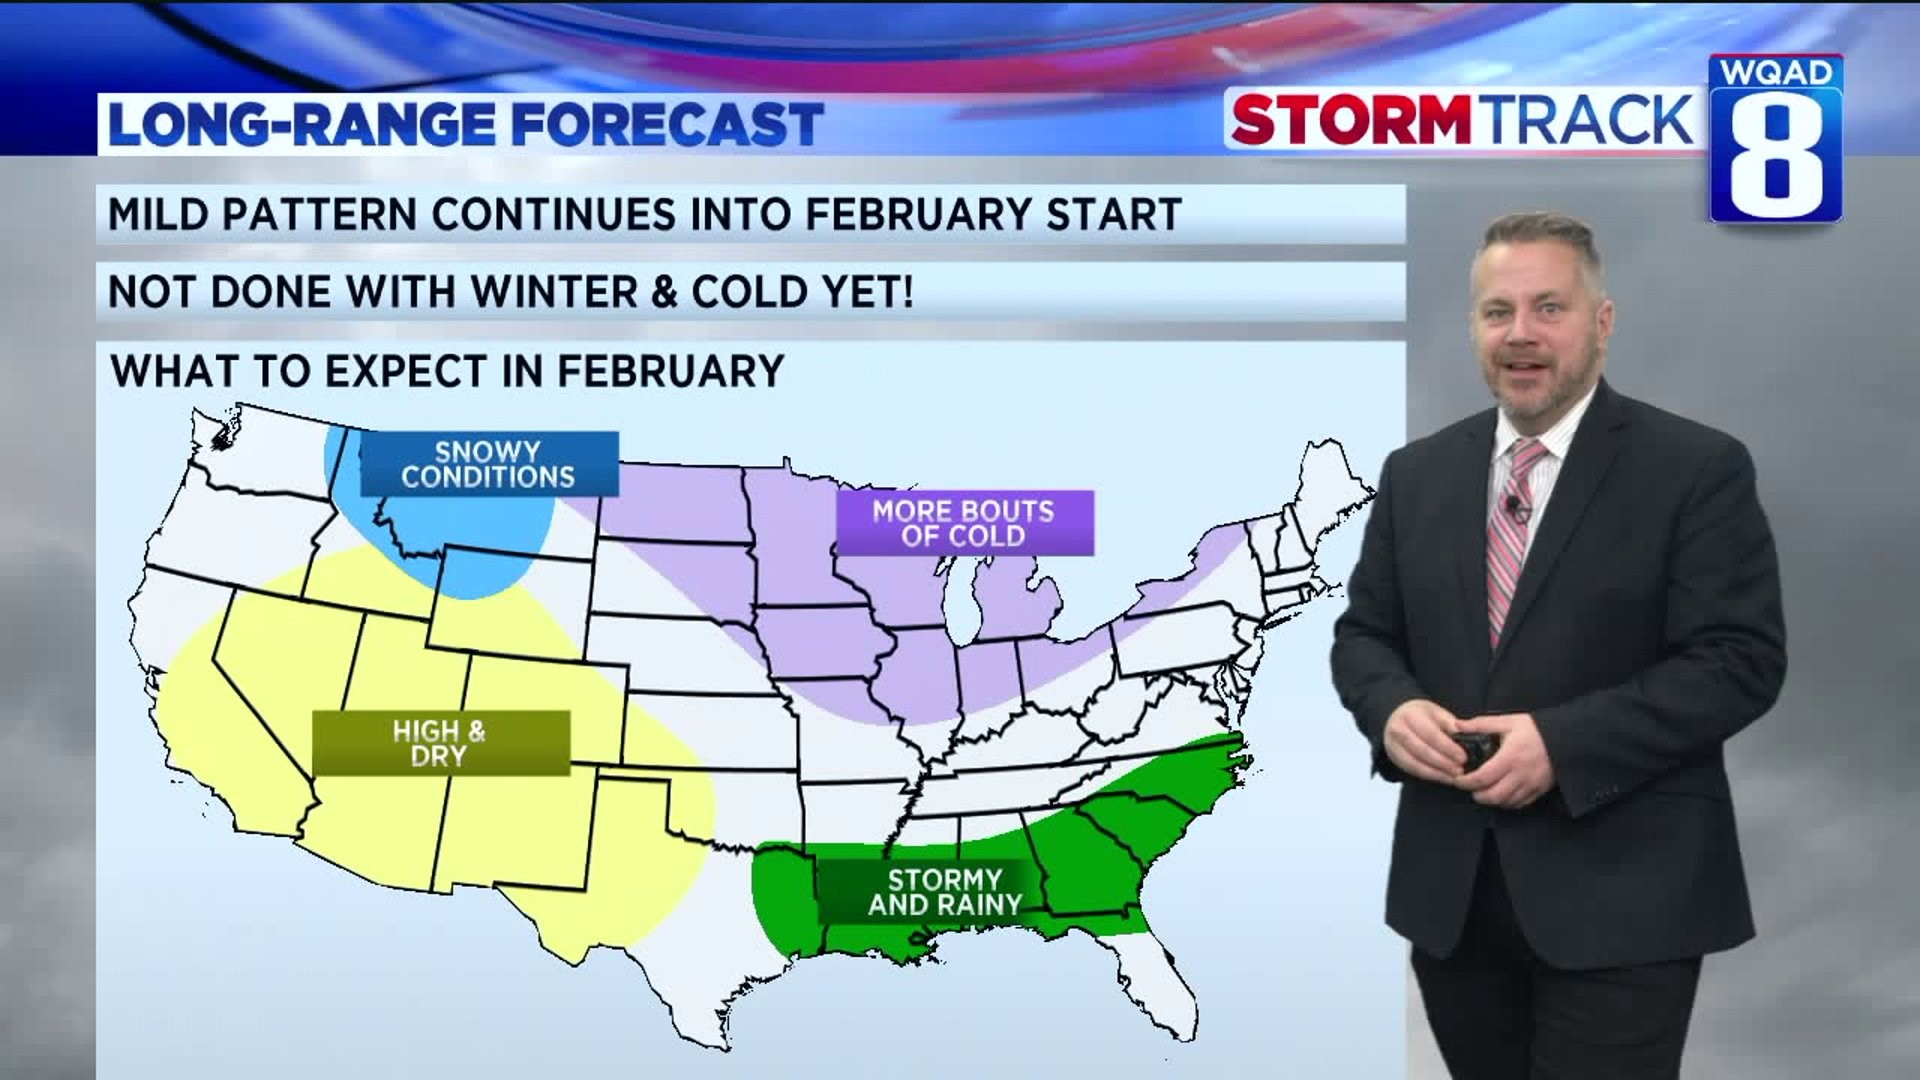 Eric looks at the long range forecast for February